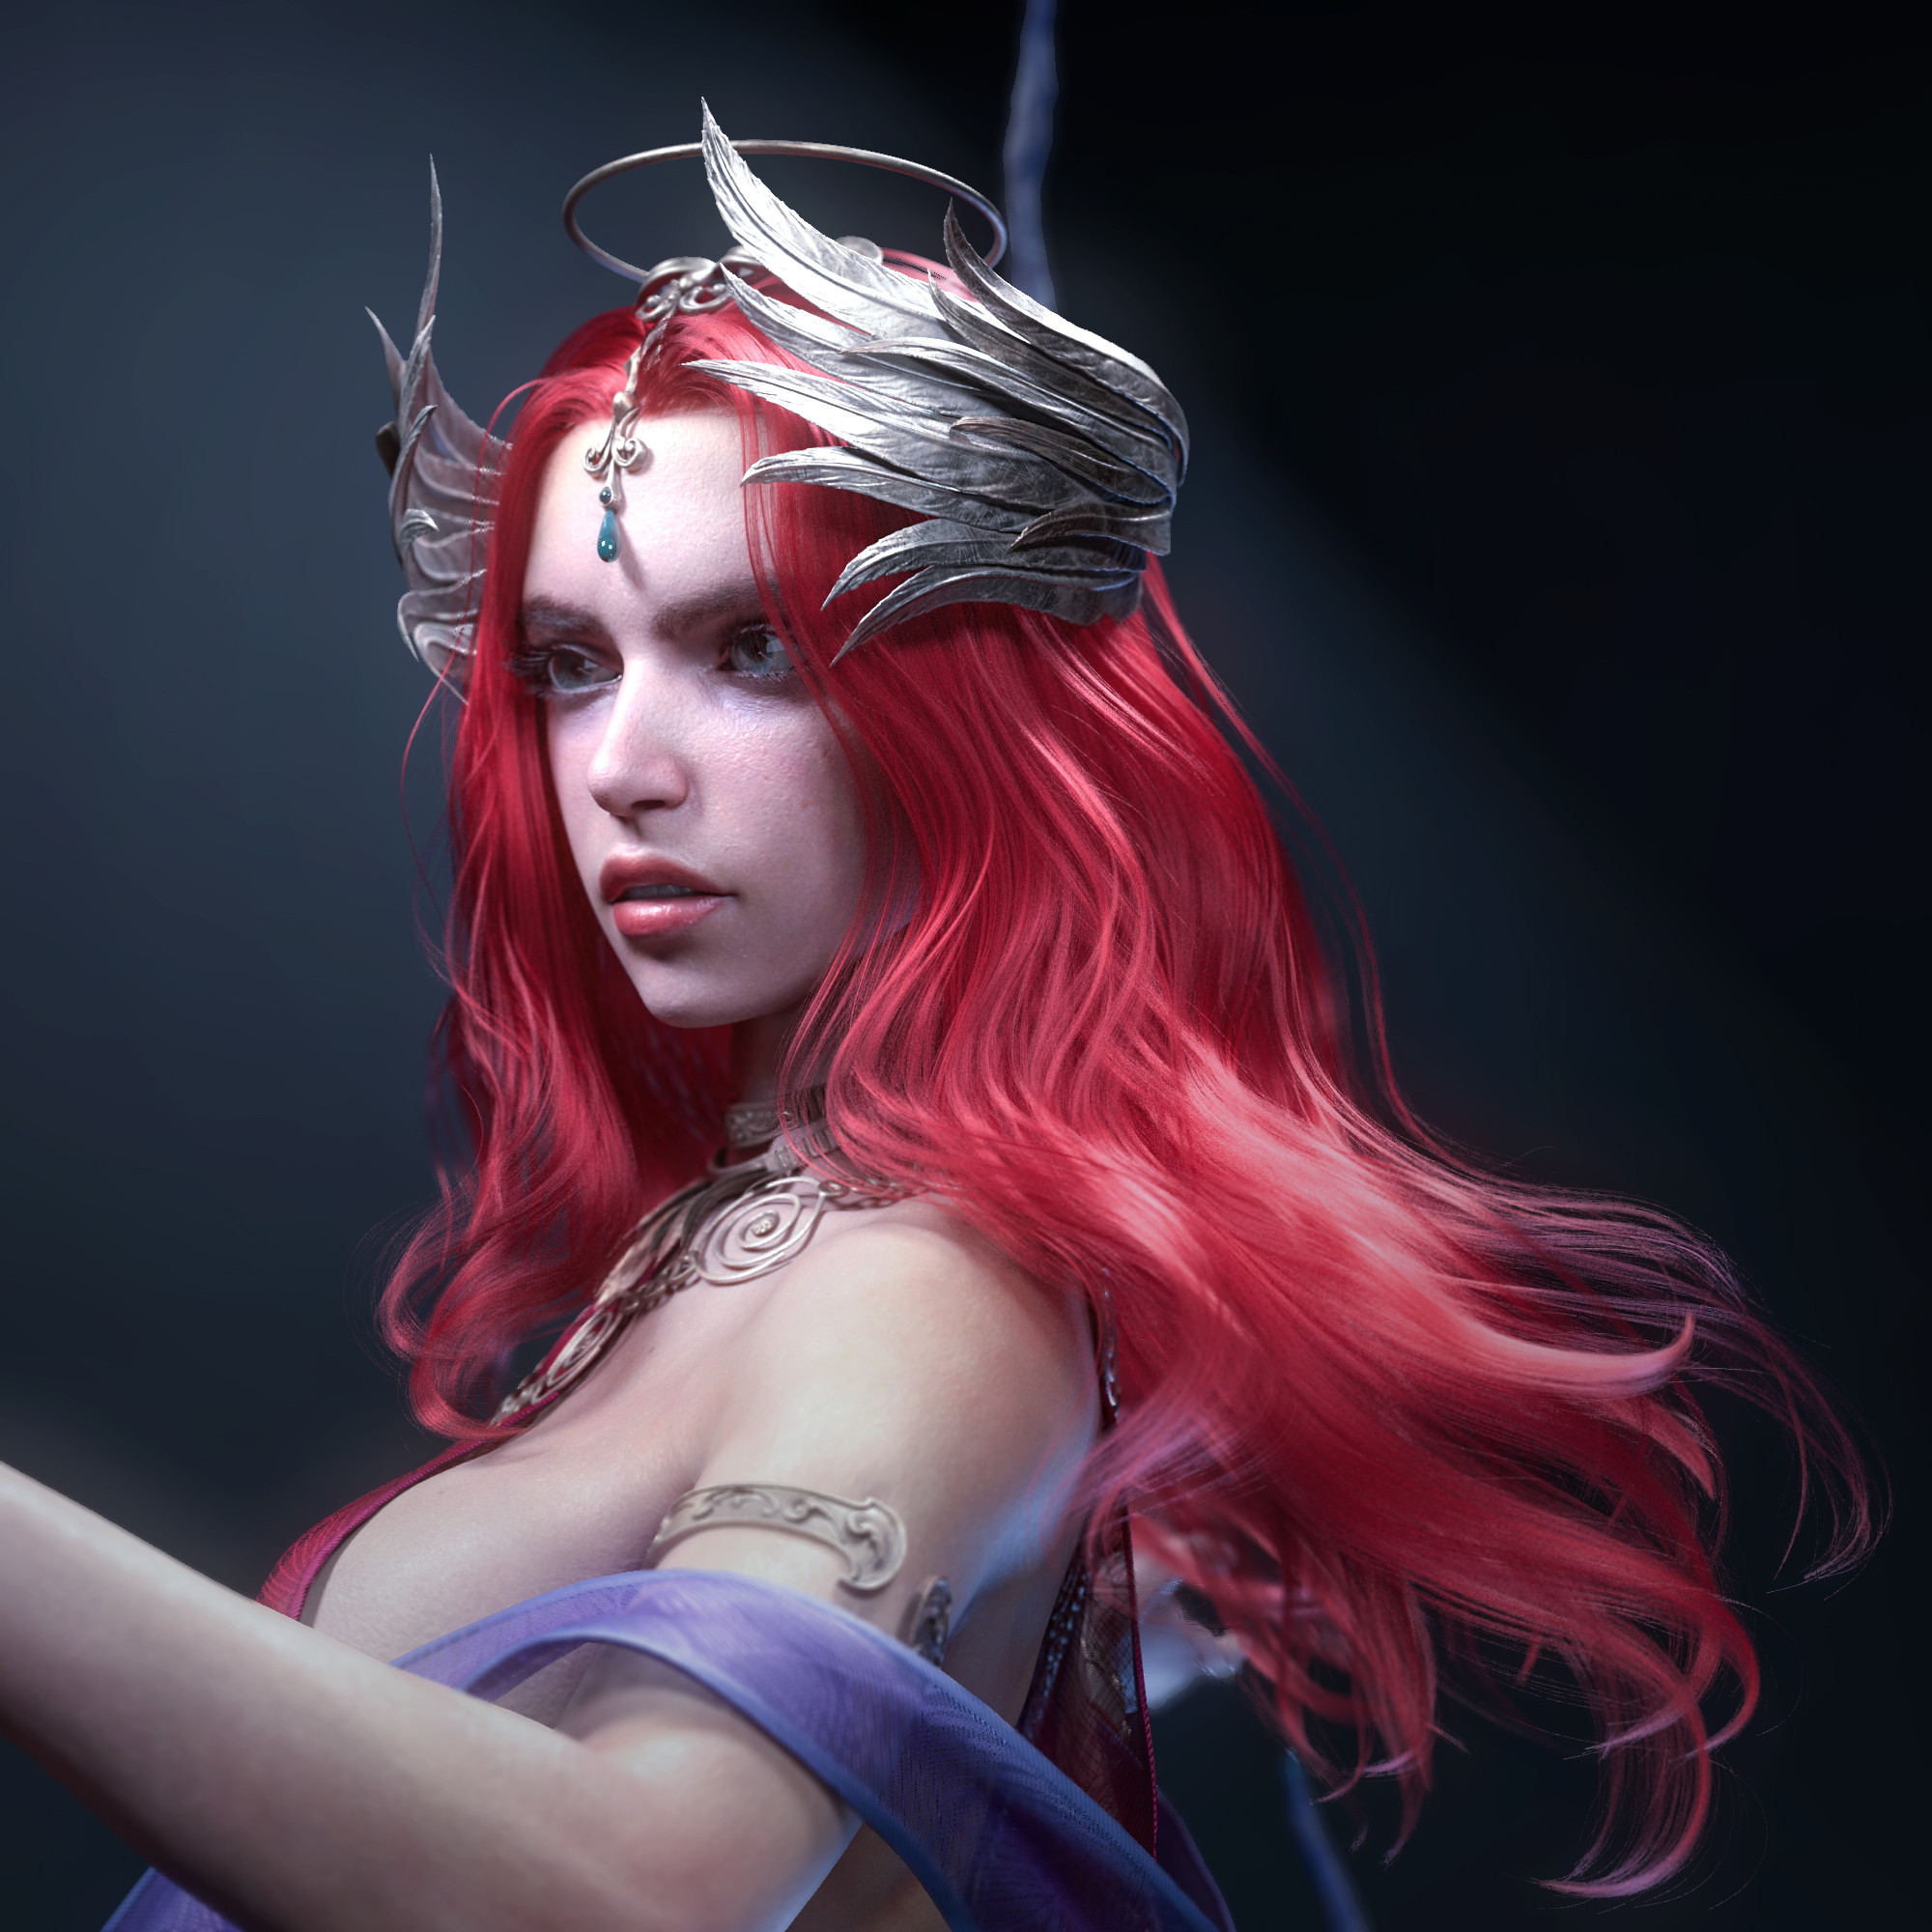 General 2000x2000 artwork women fantasy art fantasy girl digital art long hair redhead looking away